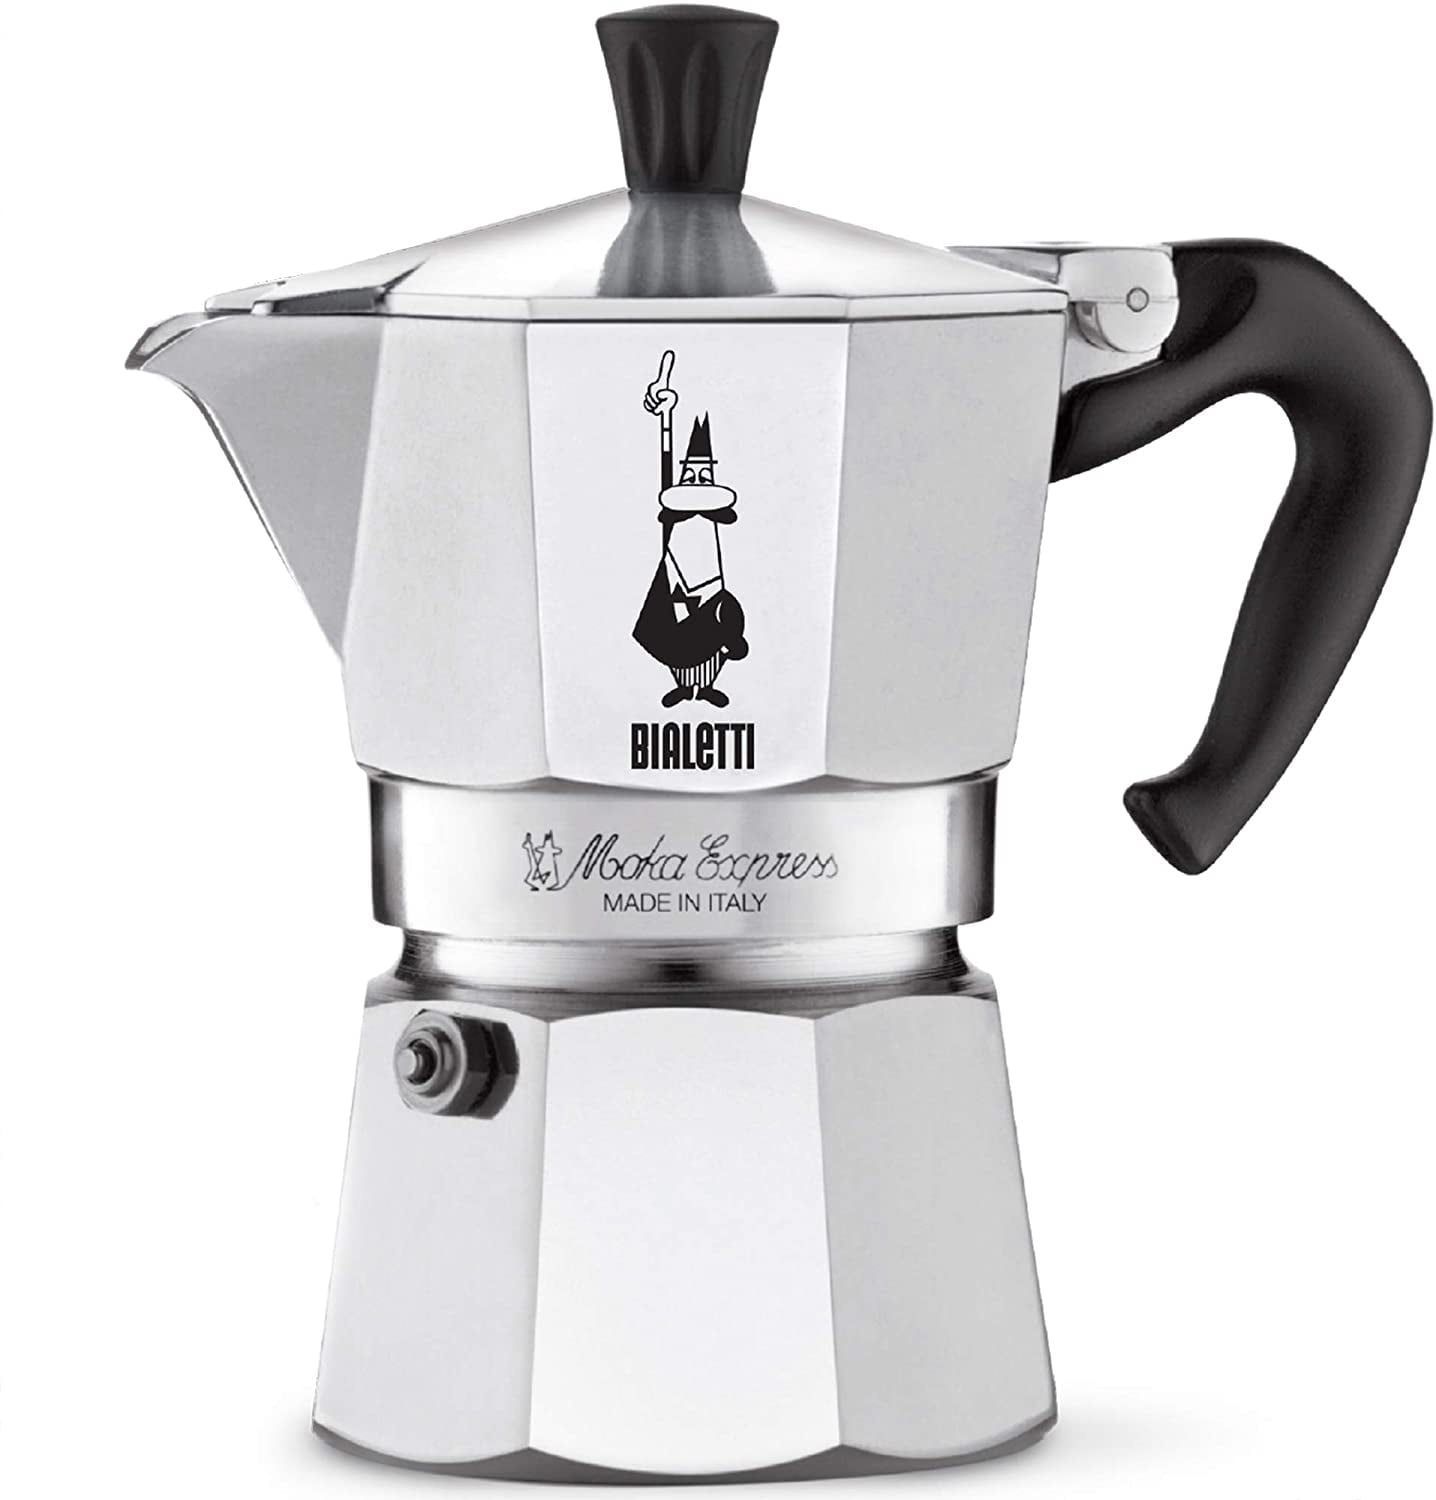 3-CUP BIALETTI COFFEE MAKER - Gray